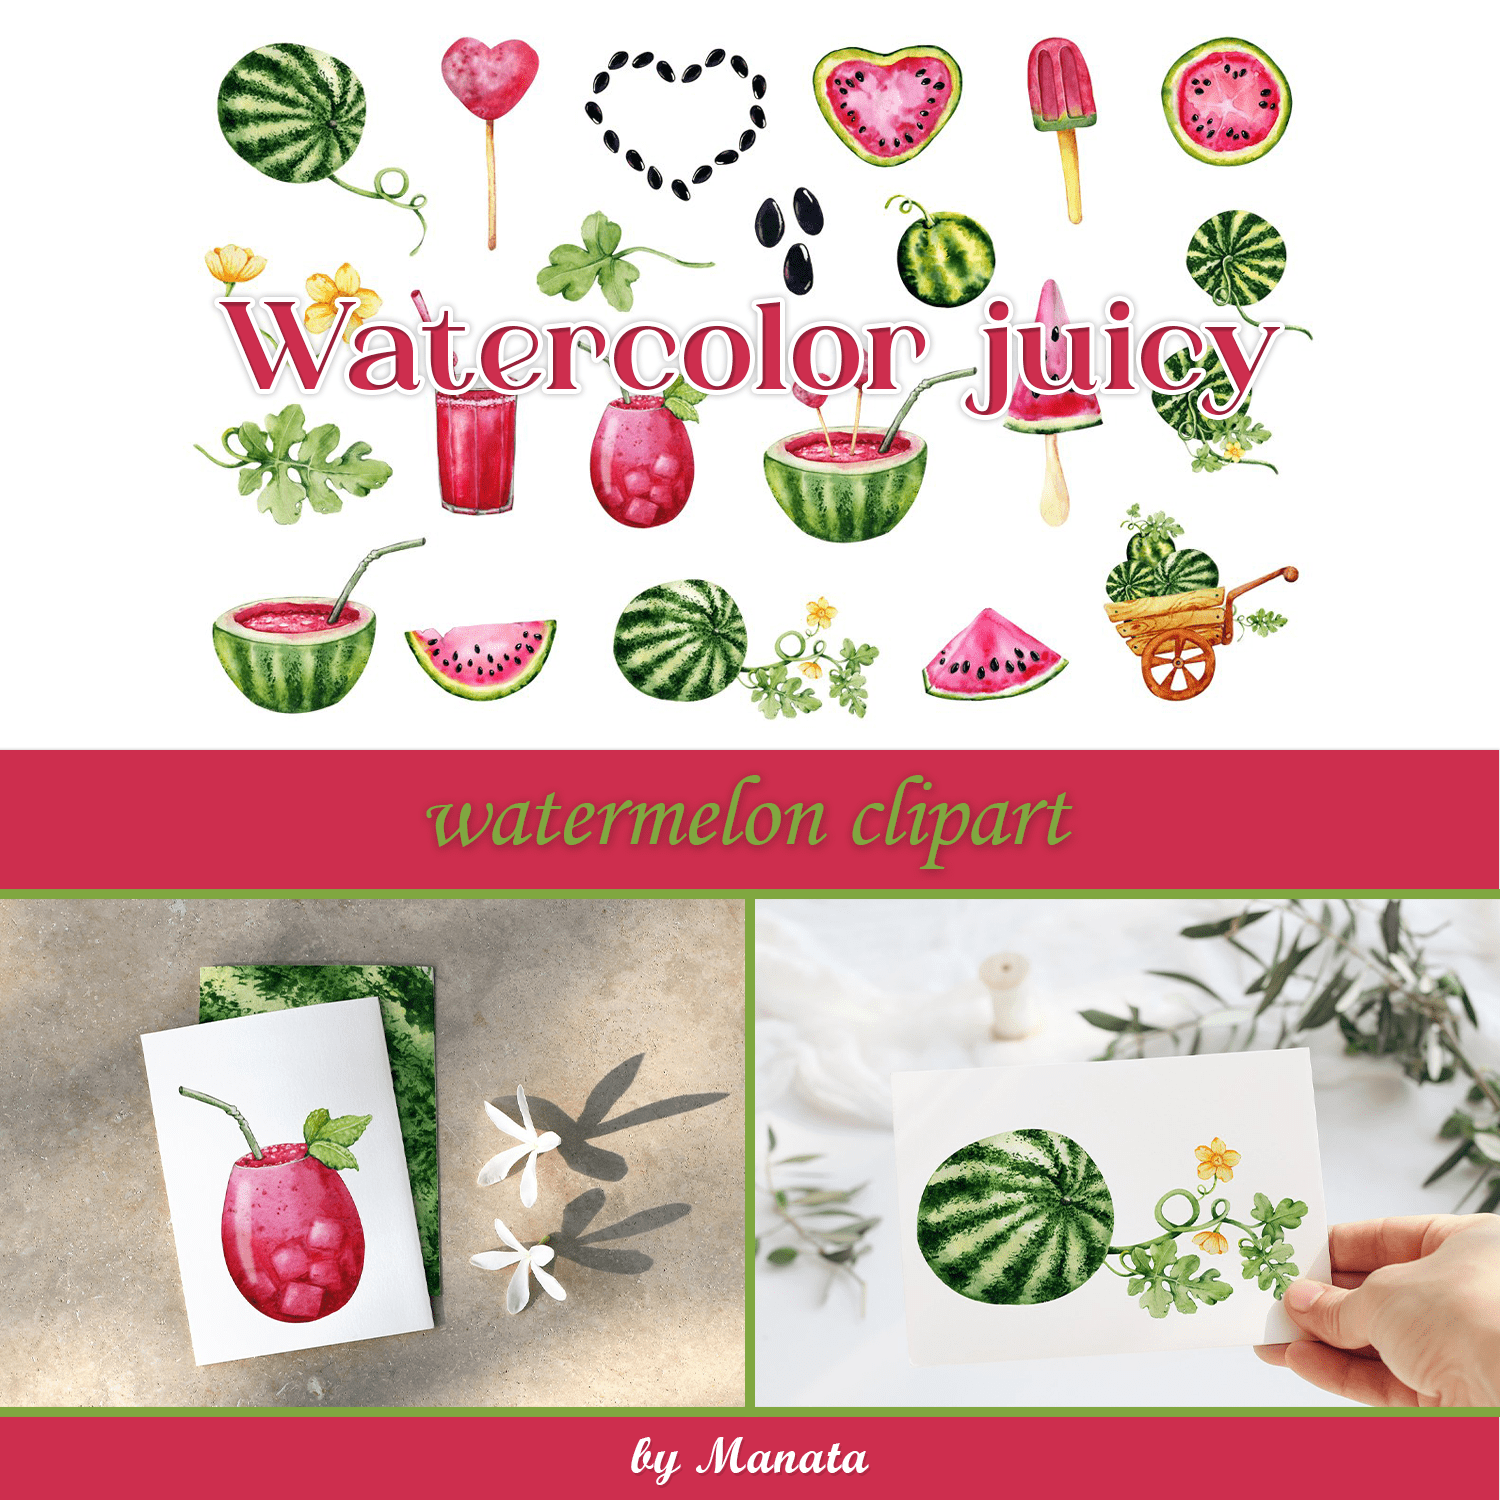 Watercolor juicy watermelon clipart created by Manata.